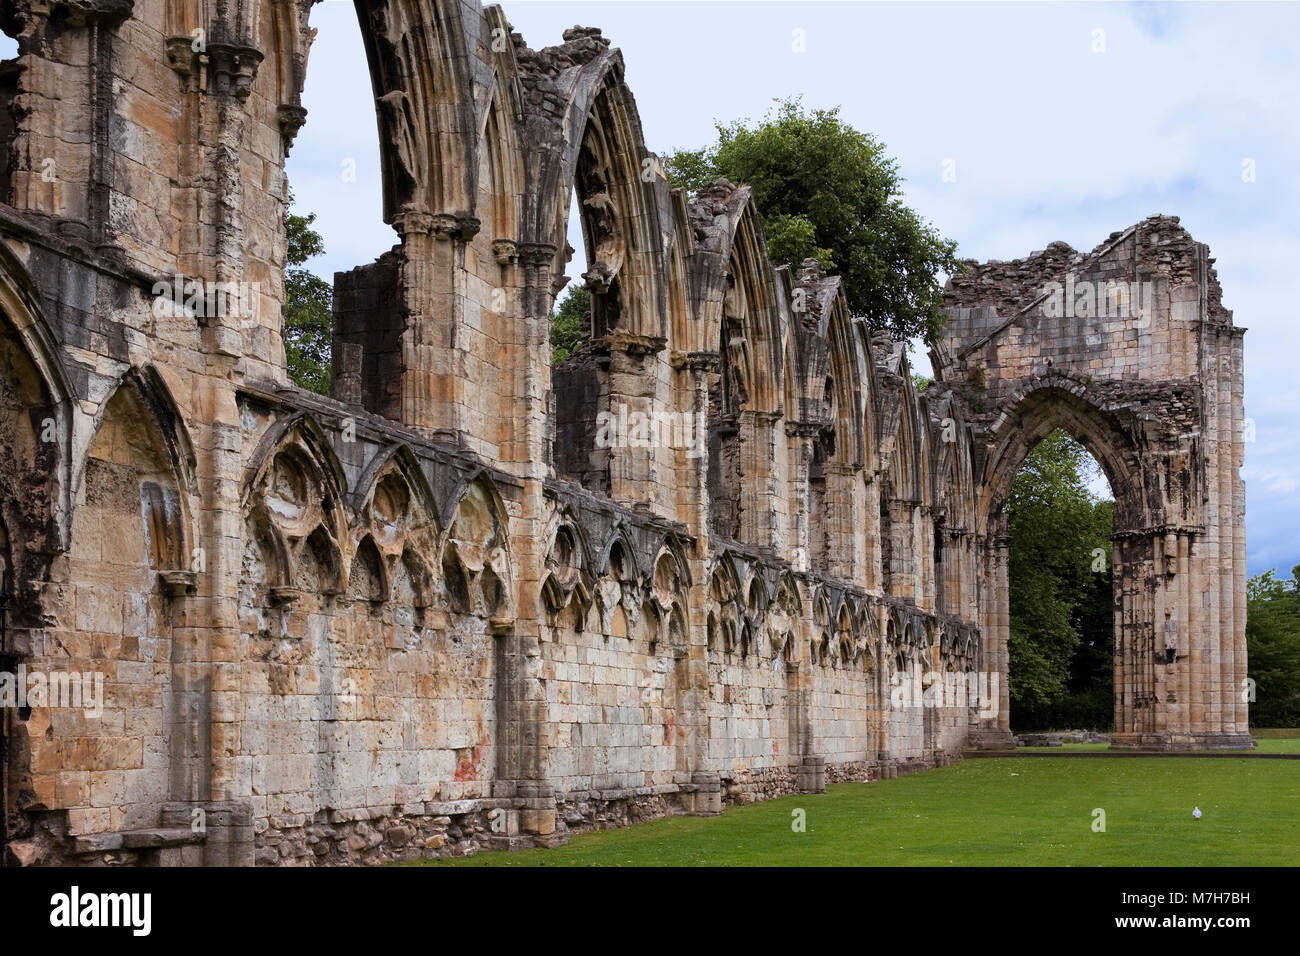 York Museum Gardens : ruines de la nef de St Mary's Abbey, York, England, UK Banque D'Images